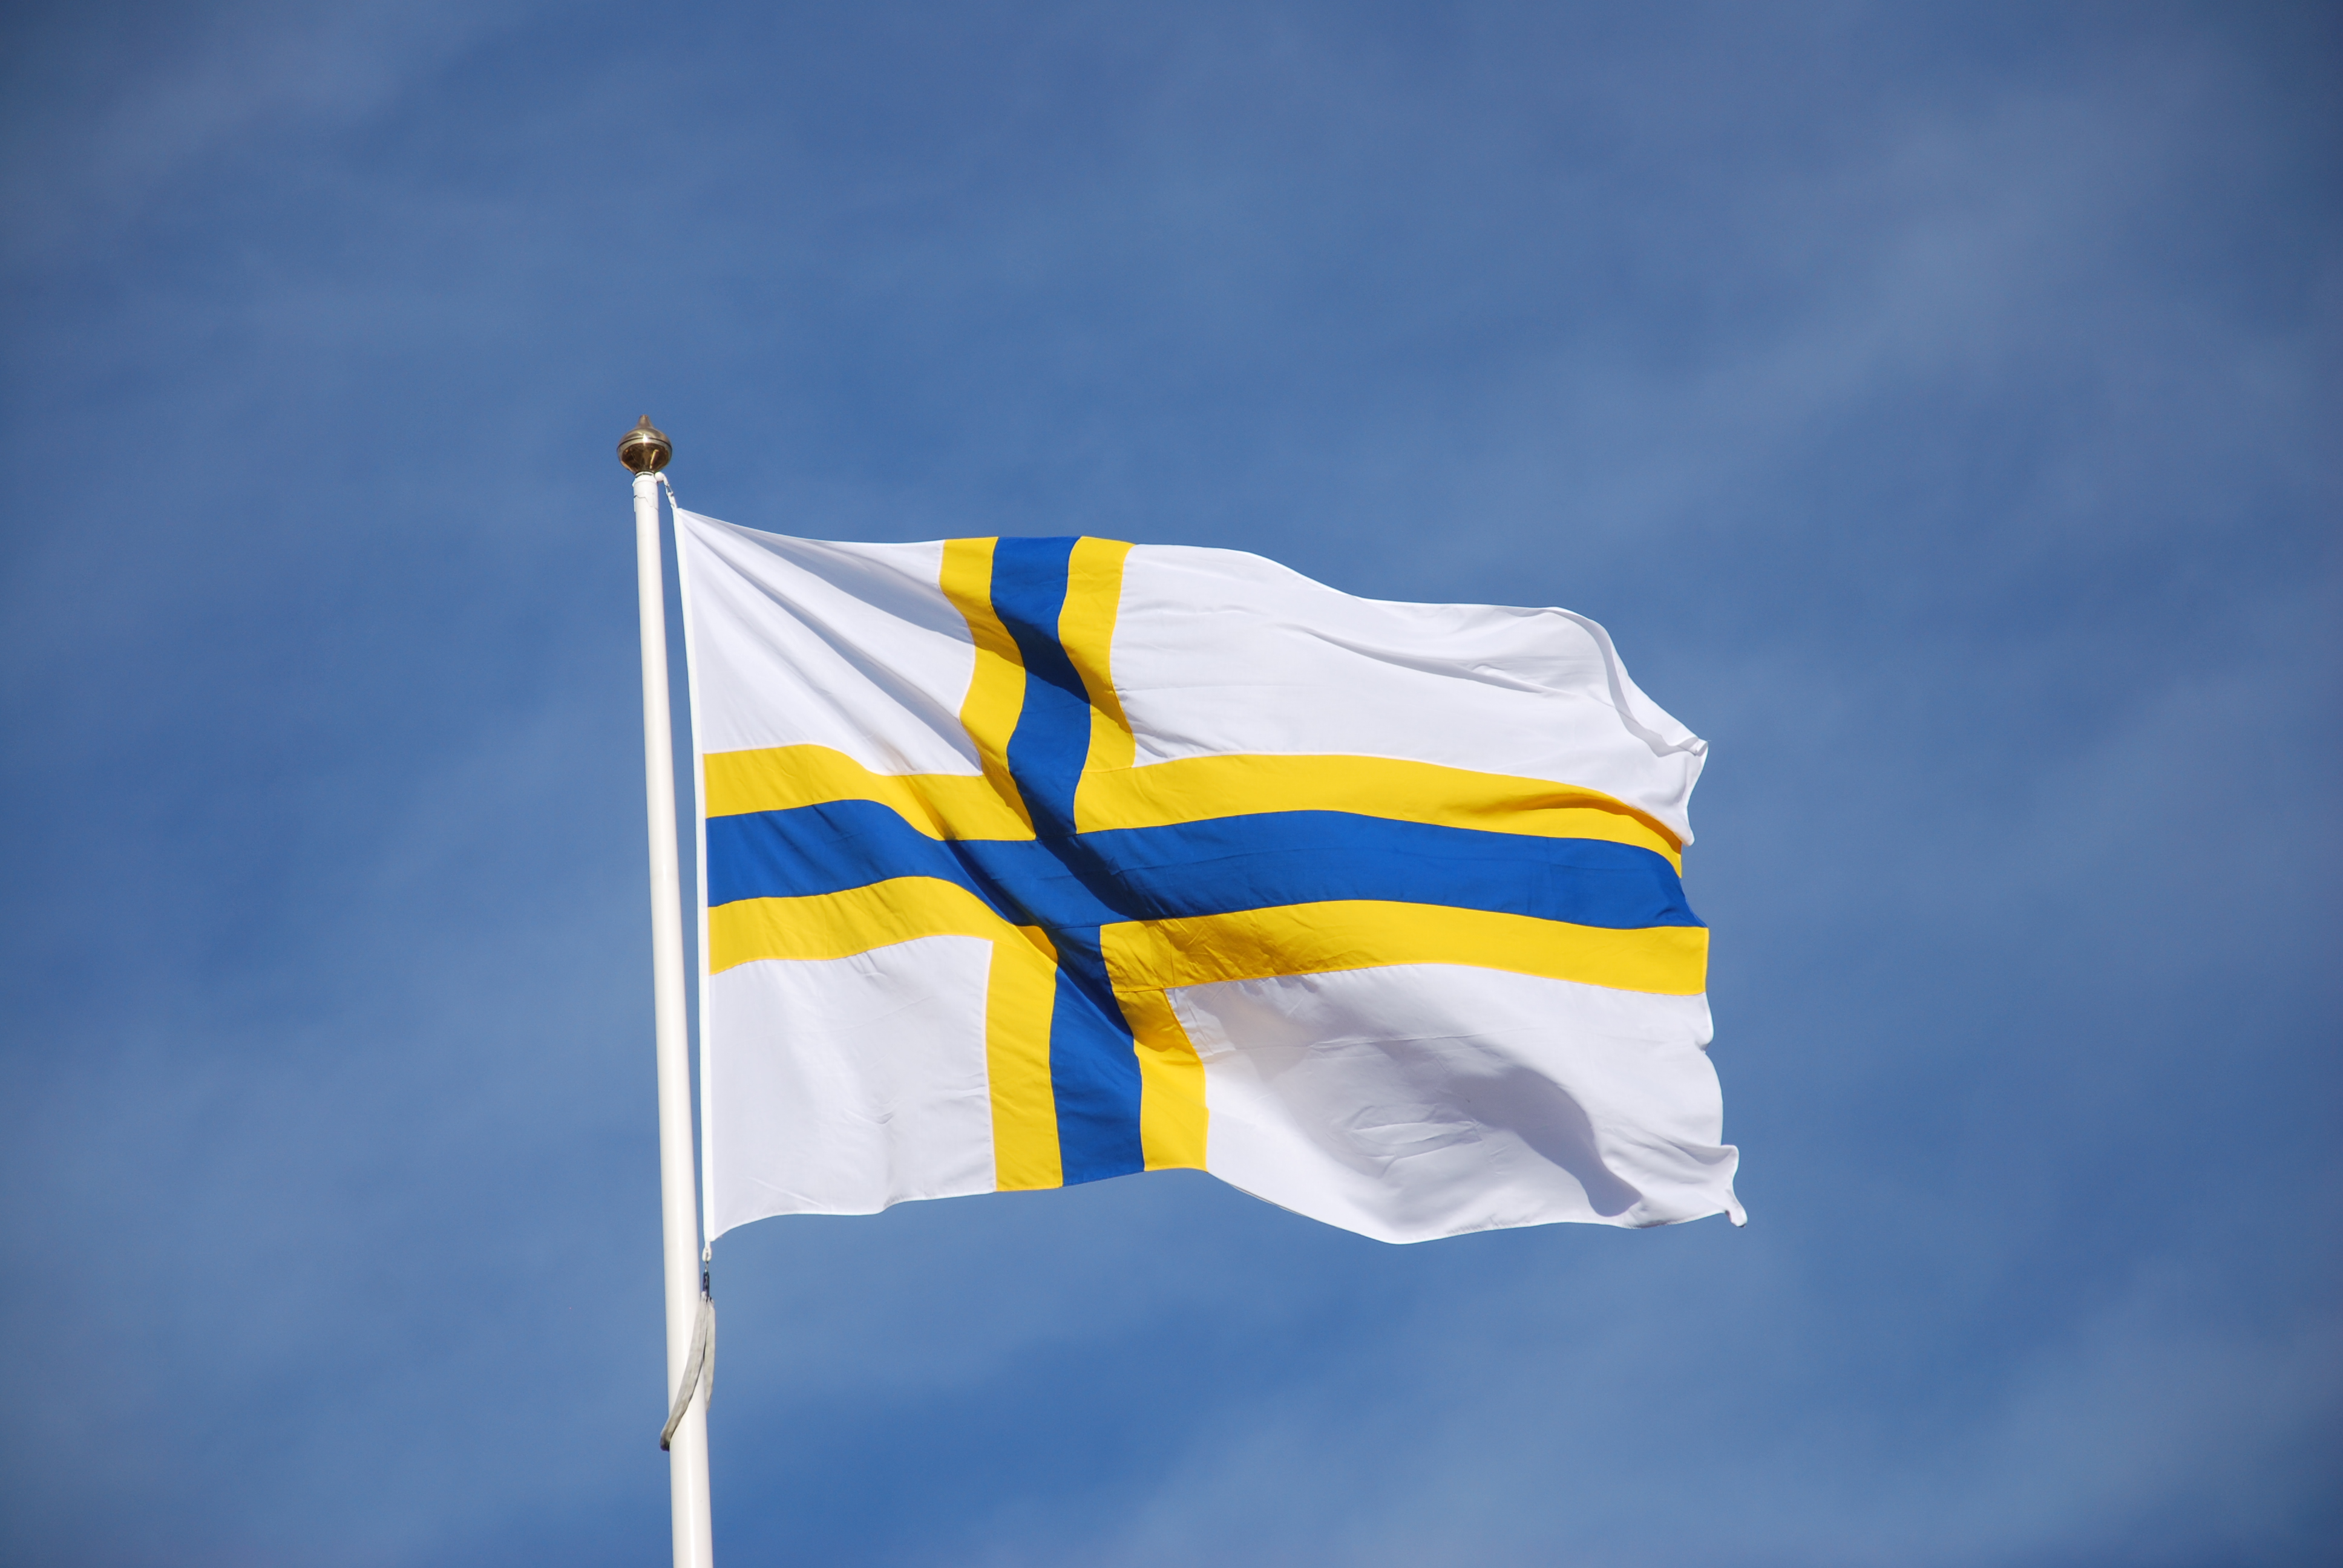 Bild på svergefinskaflaggan. Vit botten med gulblått kors.